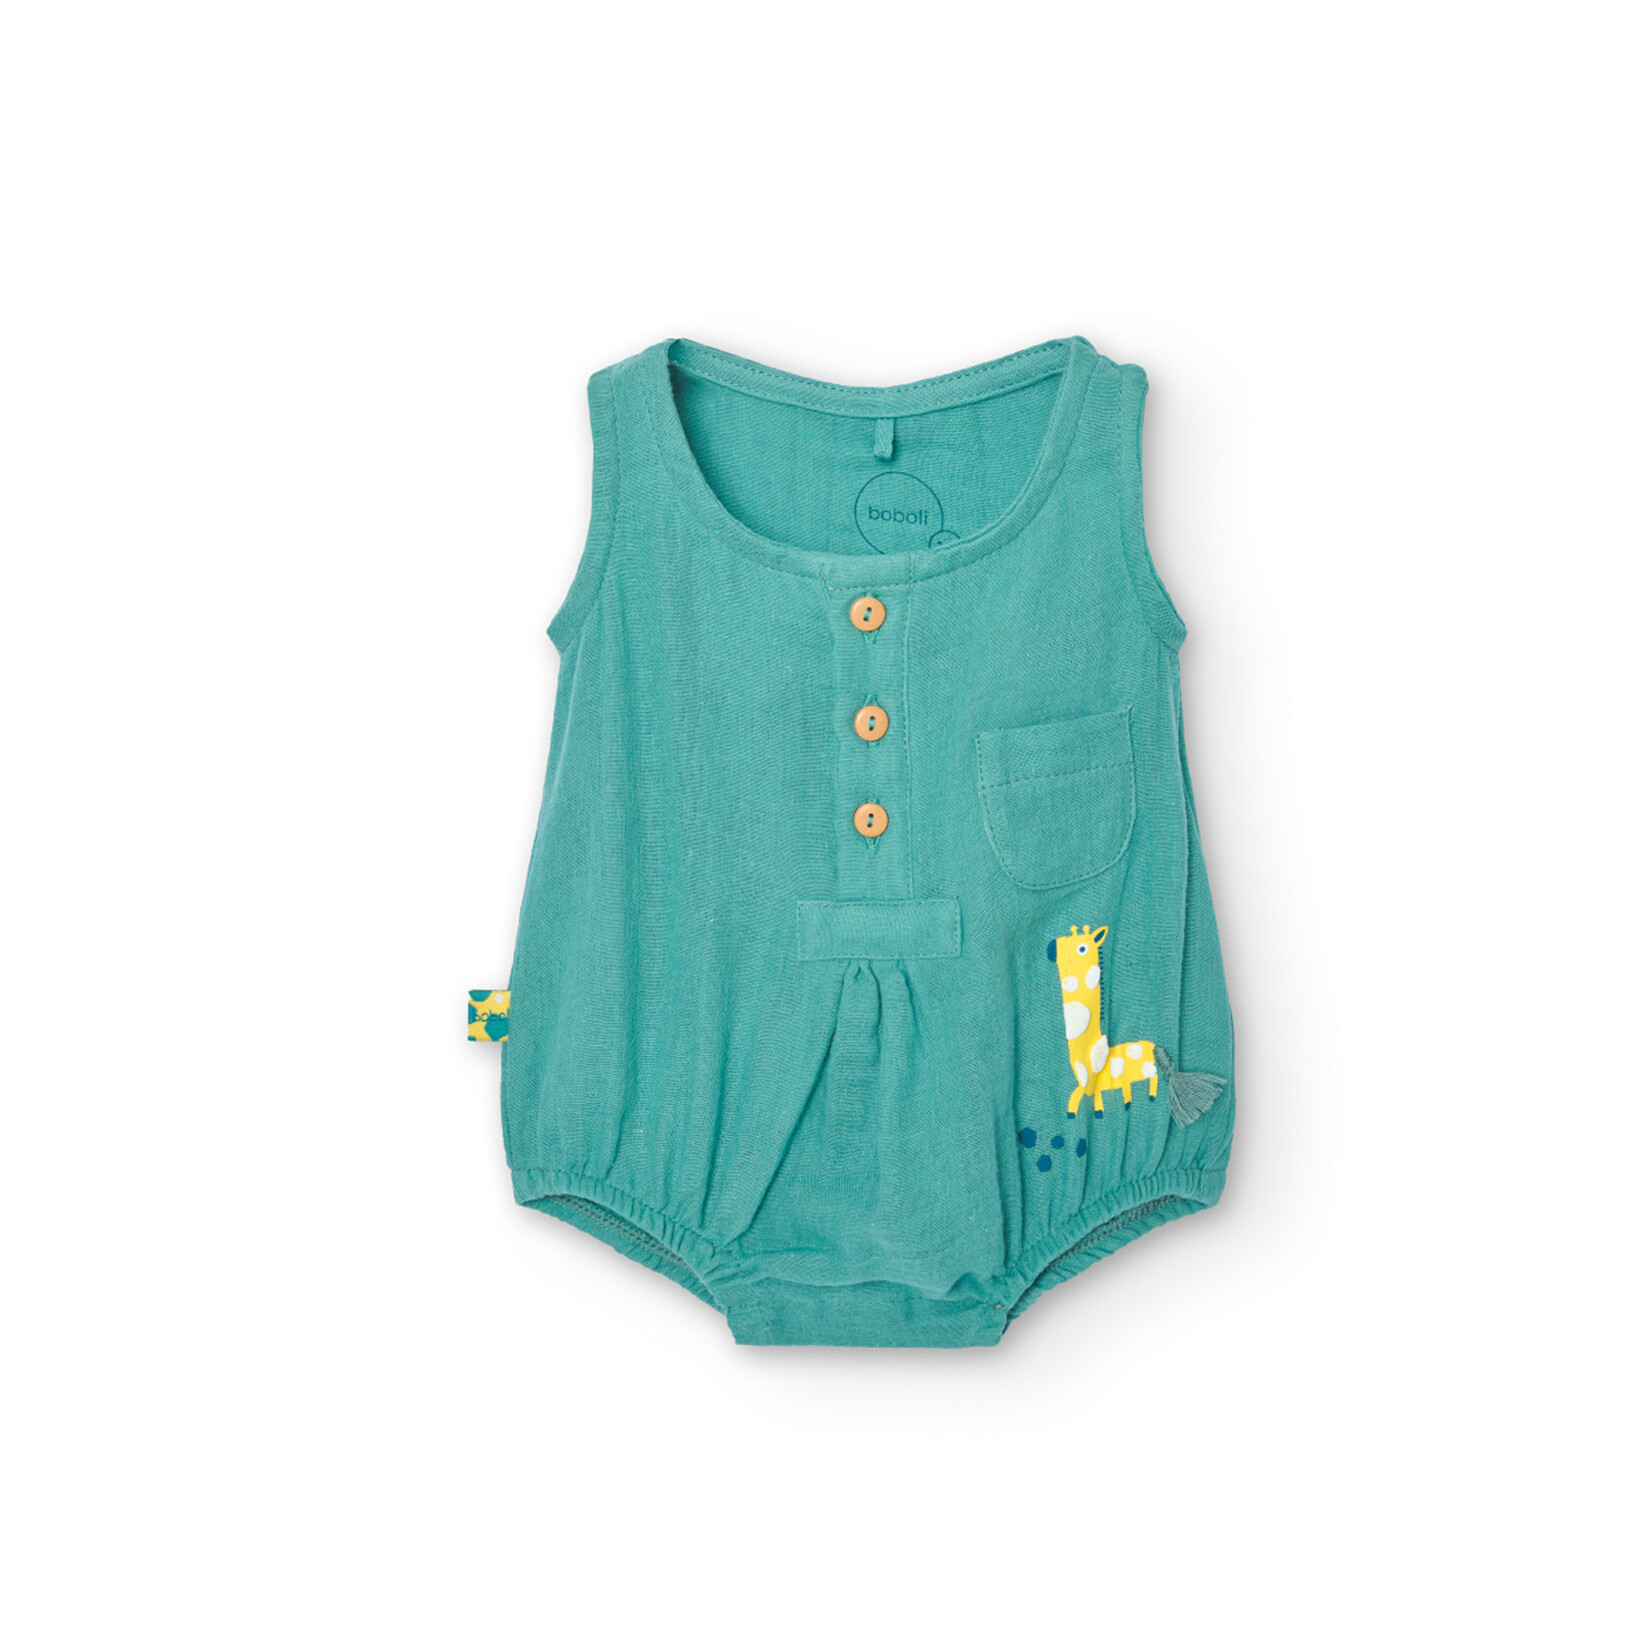 Boboli BOBOLI - Turquoise sleeveless romper with yellow girafe print